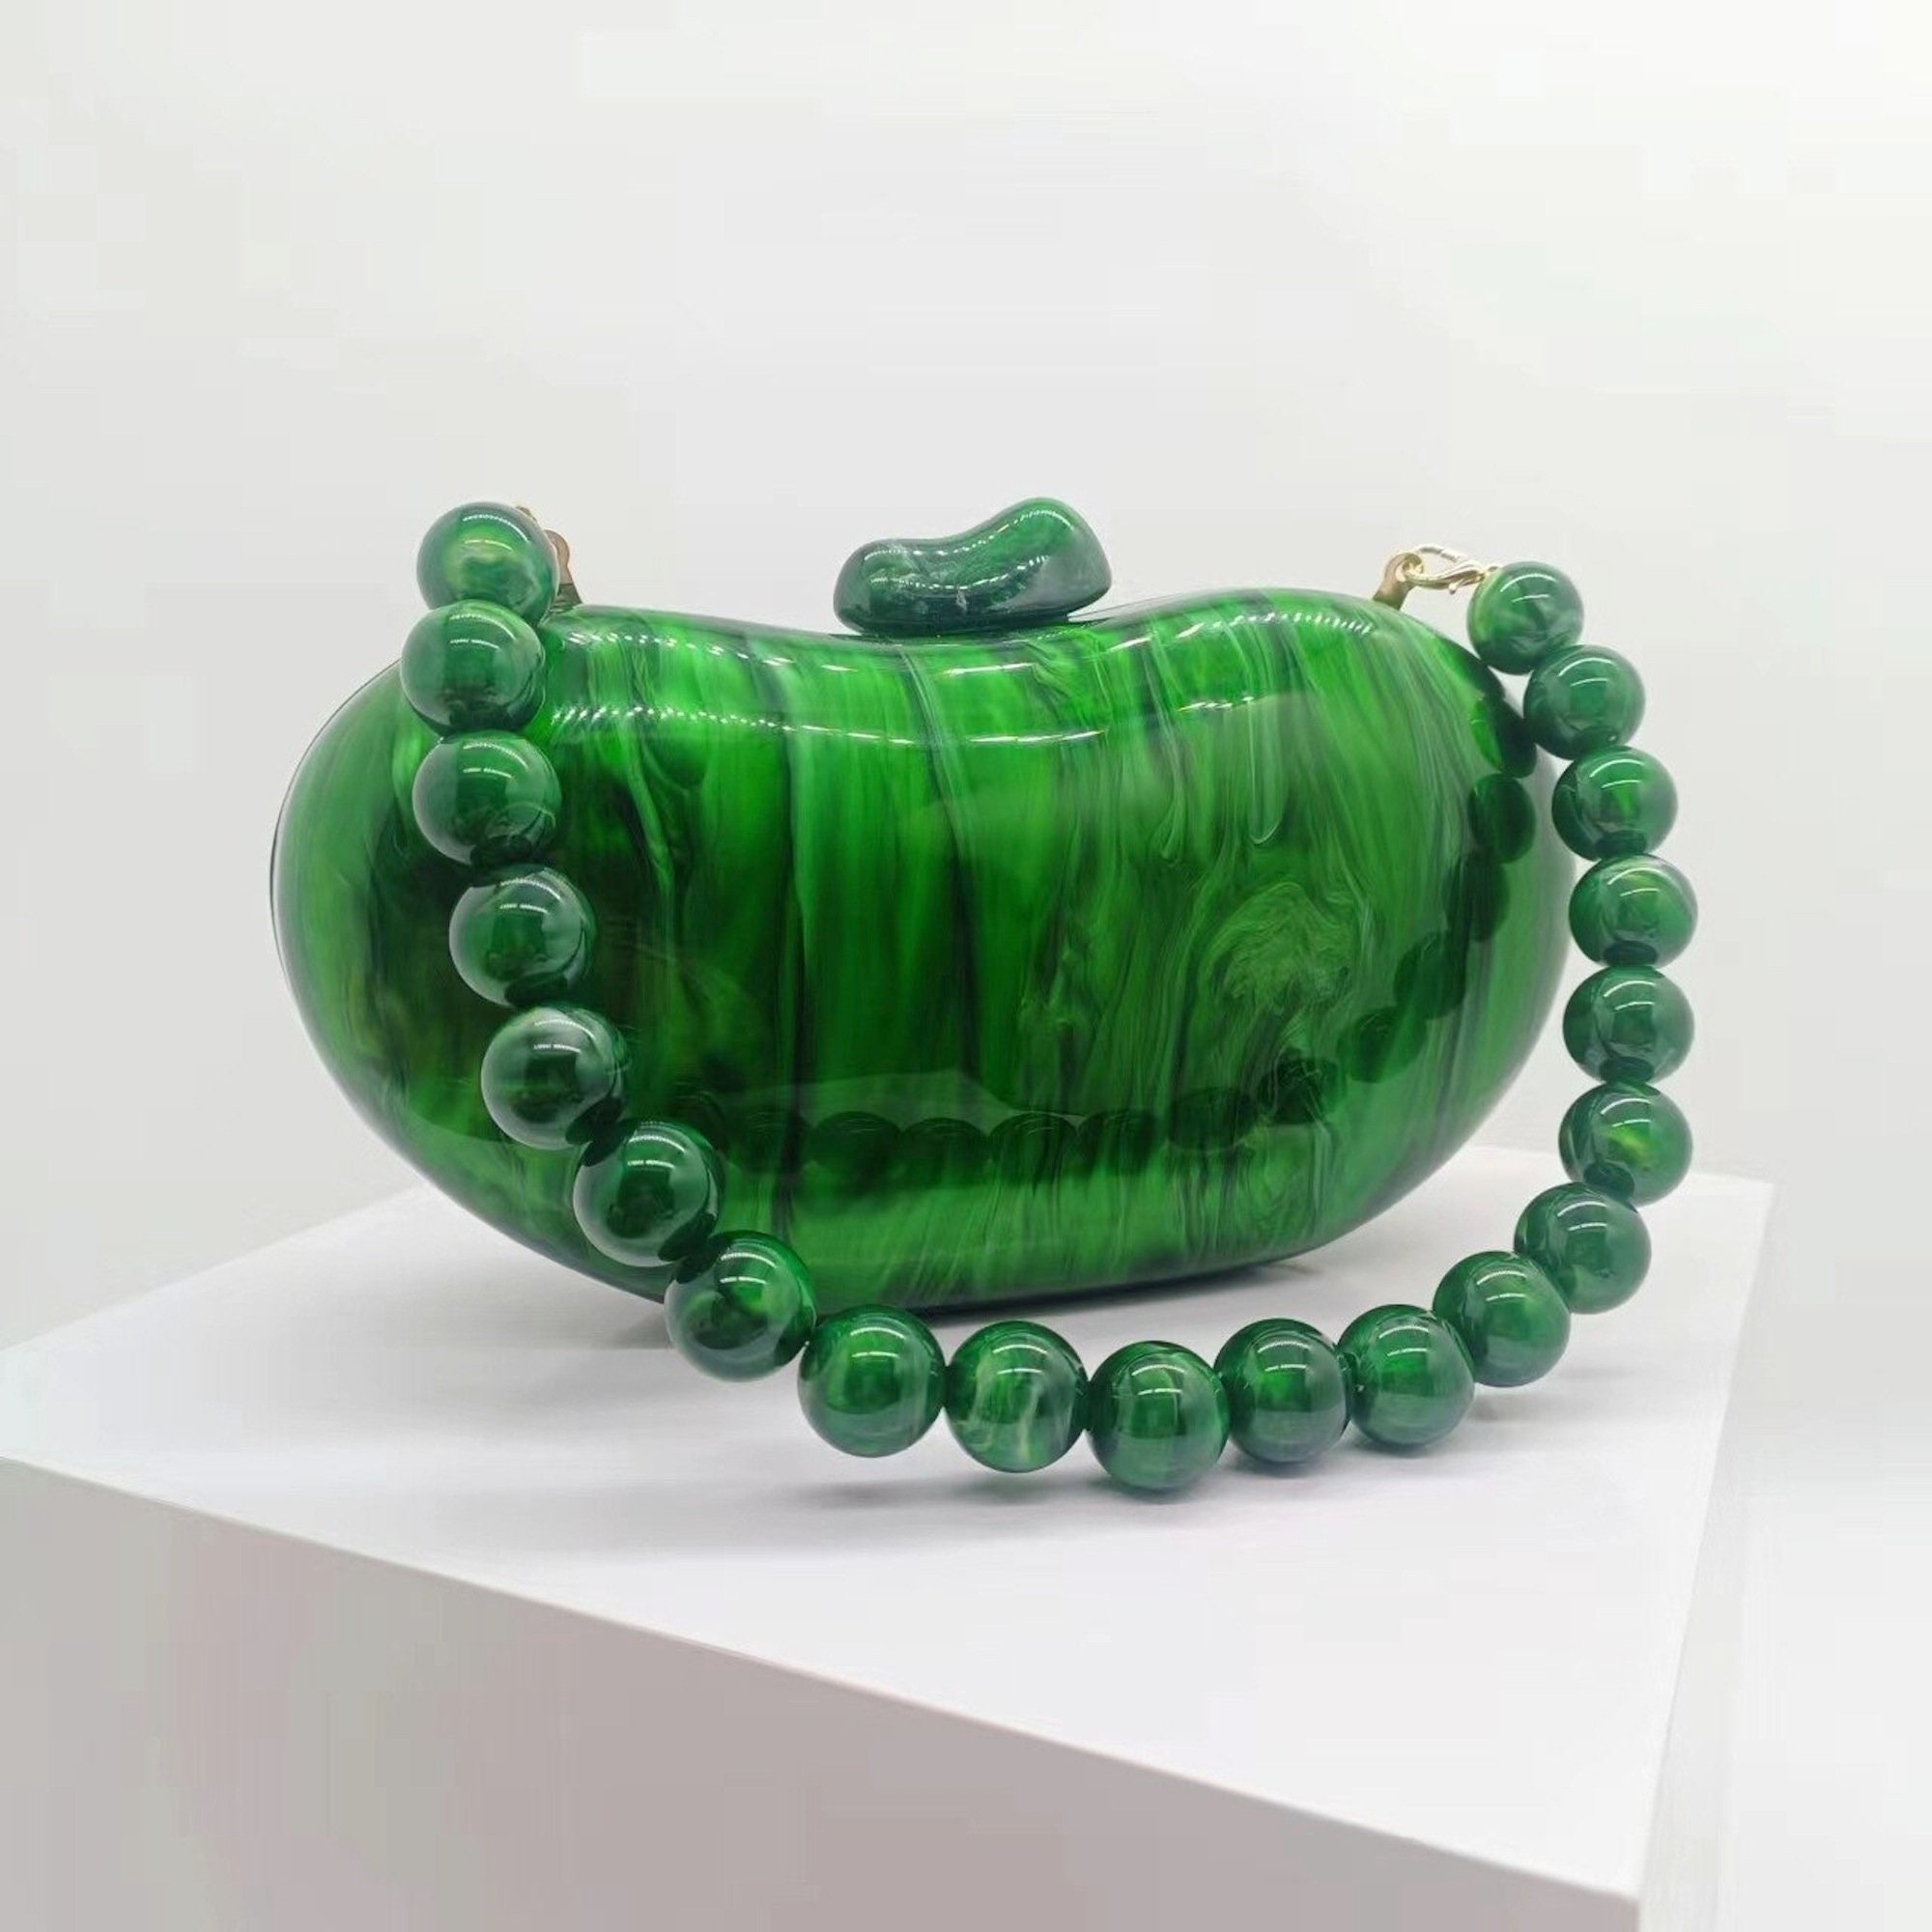 Kashura Woman Handbag Emerald Green Size -- Soft Leather